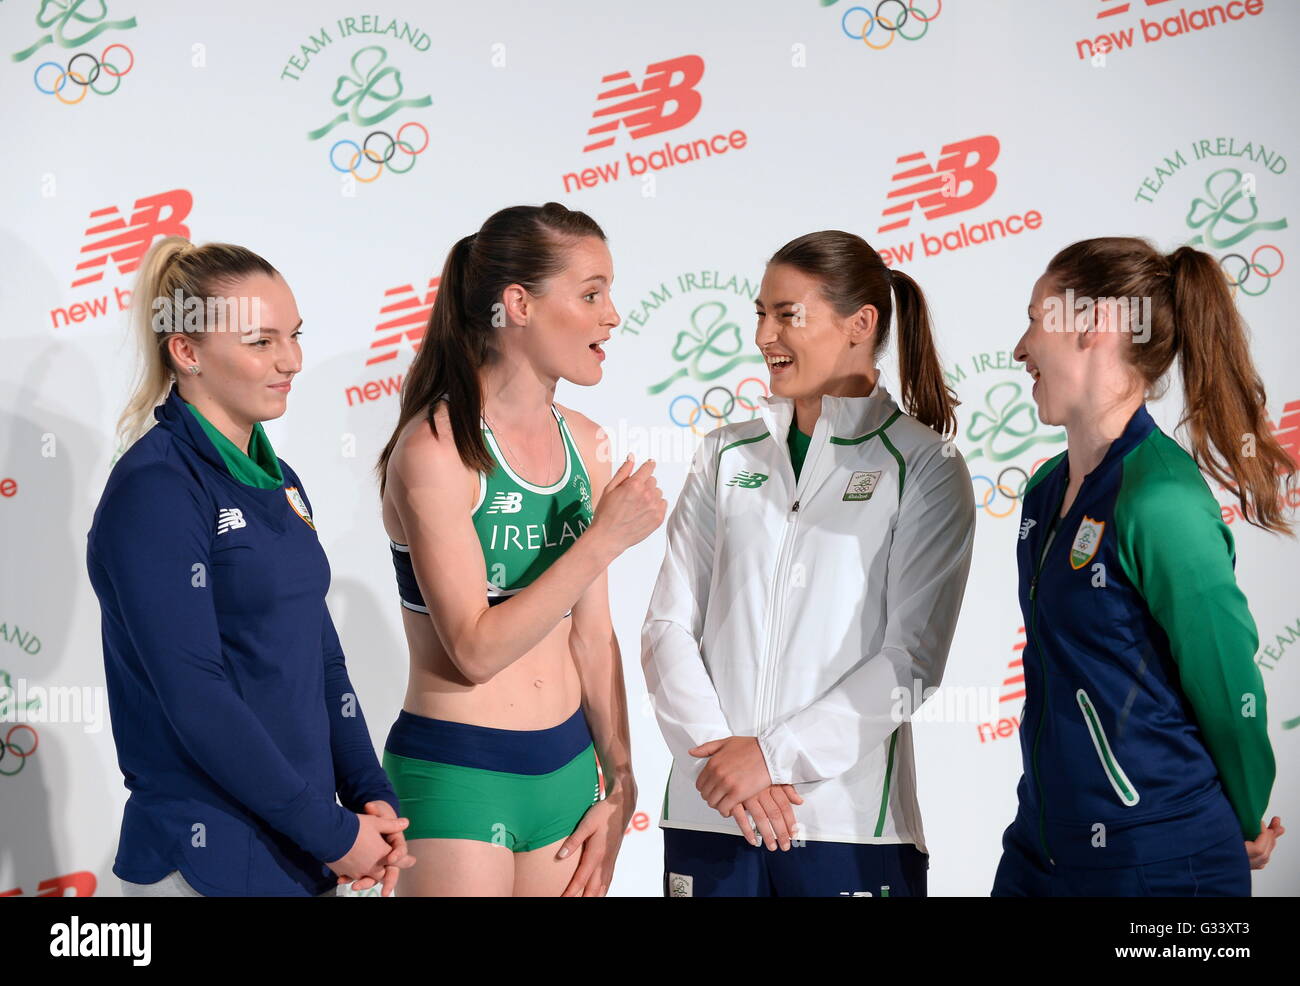 Irish Olympic team 2016 members (left 